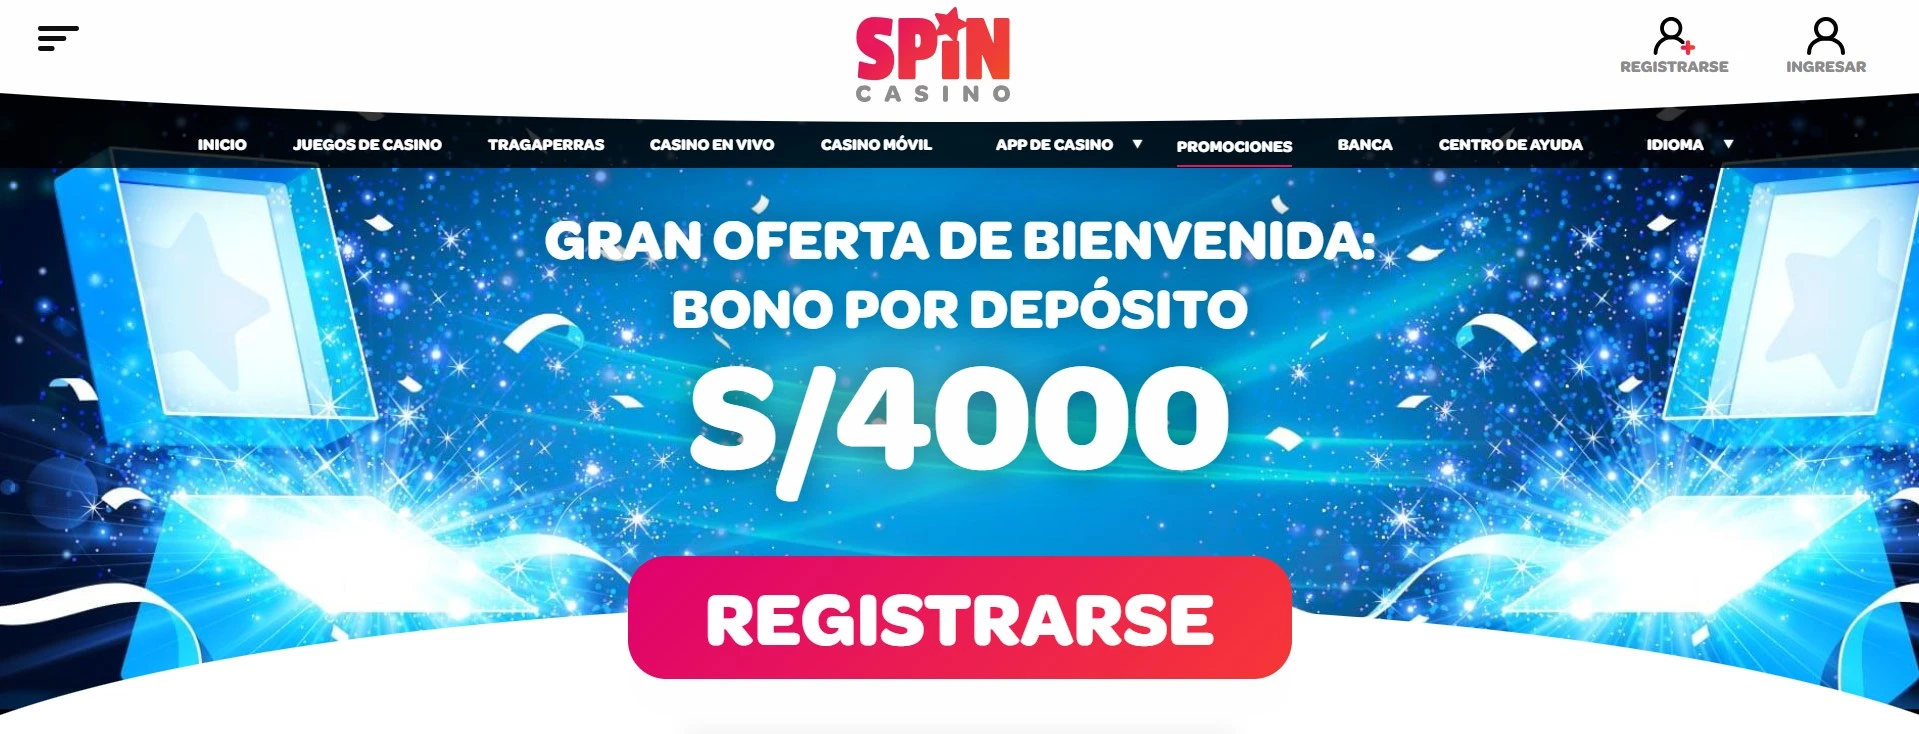 Bonos Spin Casino Perú